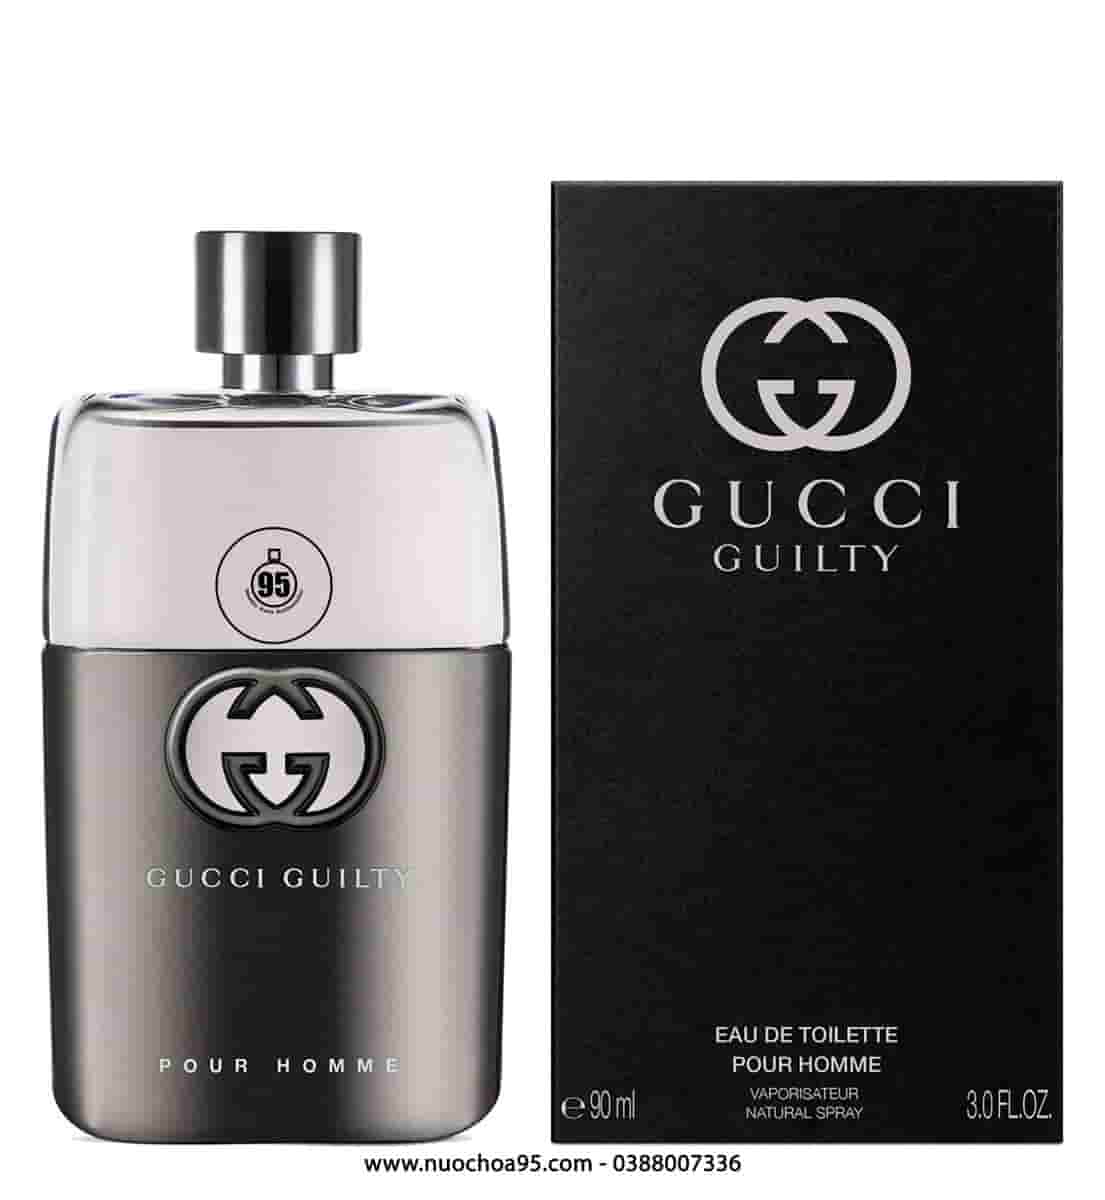 Nước hoa nam Gucci Guilty Pour Homme của hãng GUCCI